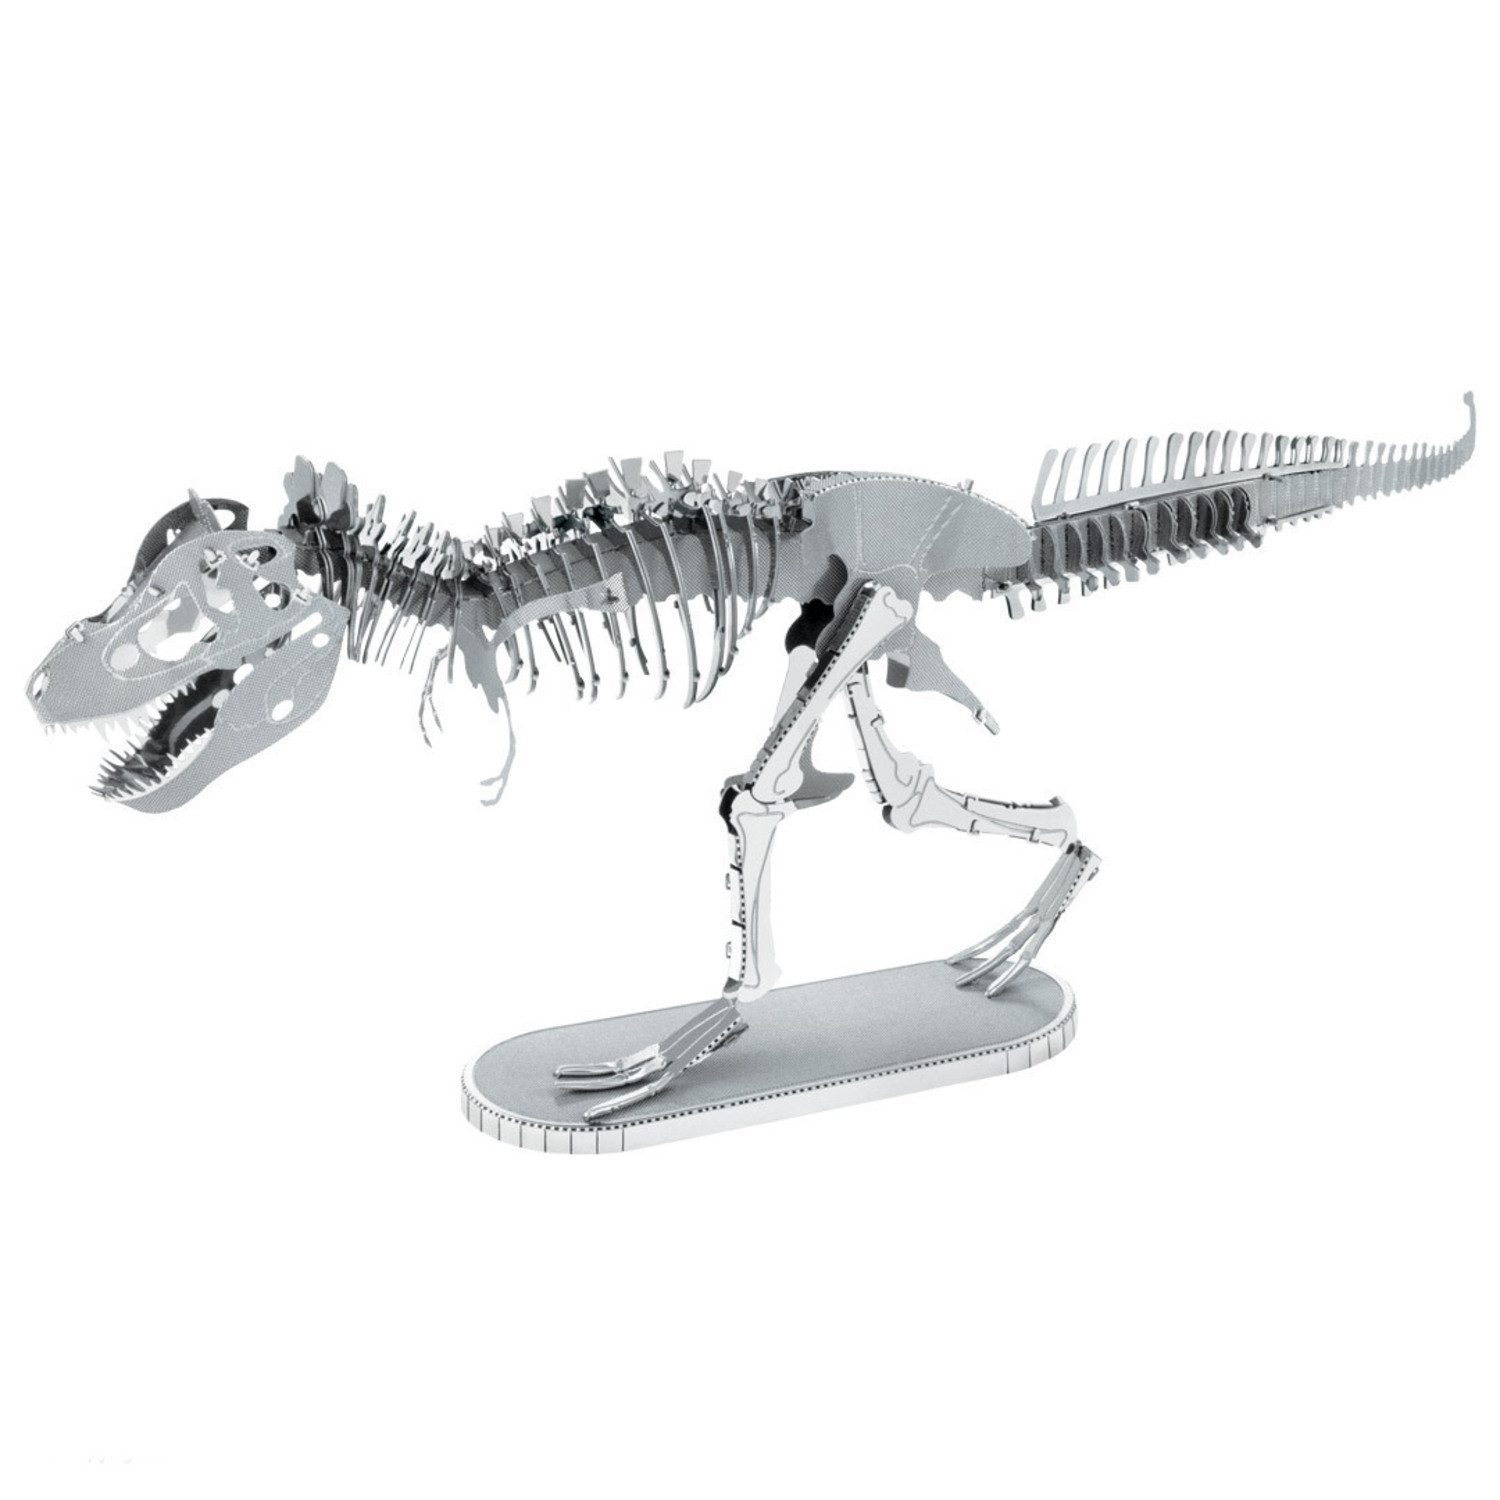 Invento Modellbausatz Tyrannosaurus Rex 3D Modellbausatz aus Metall